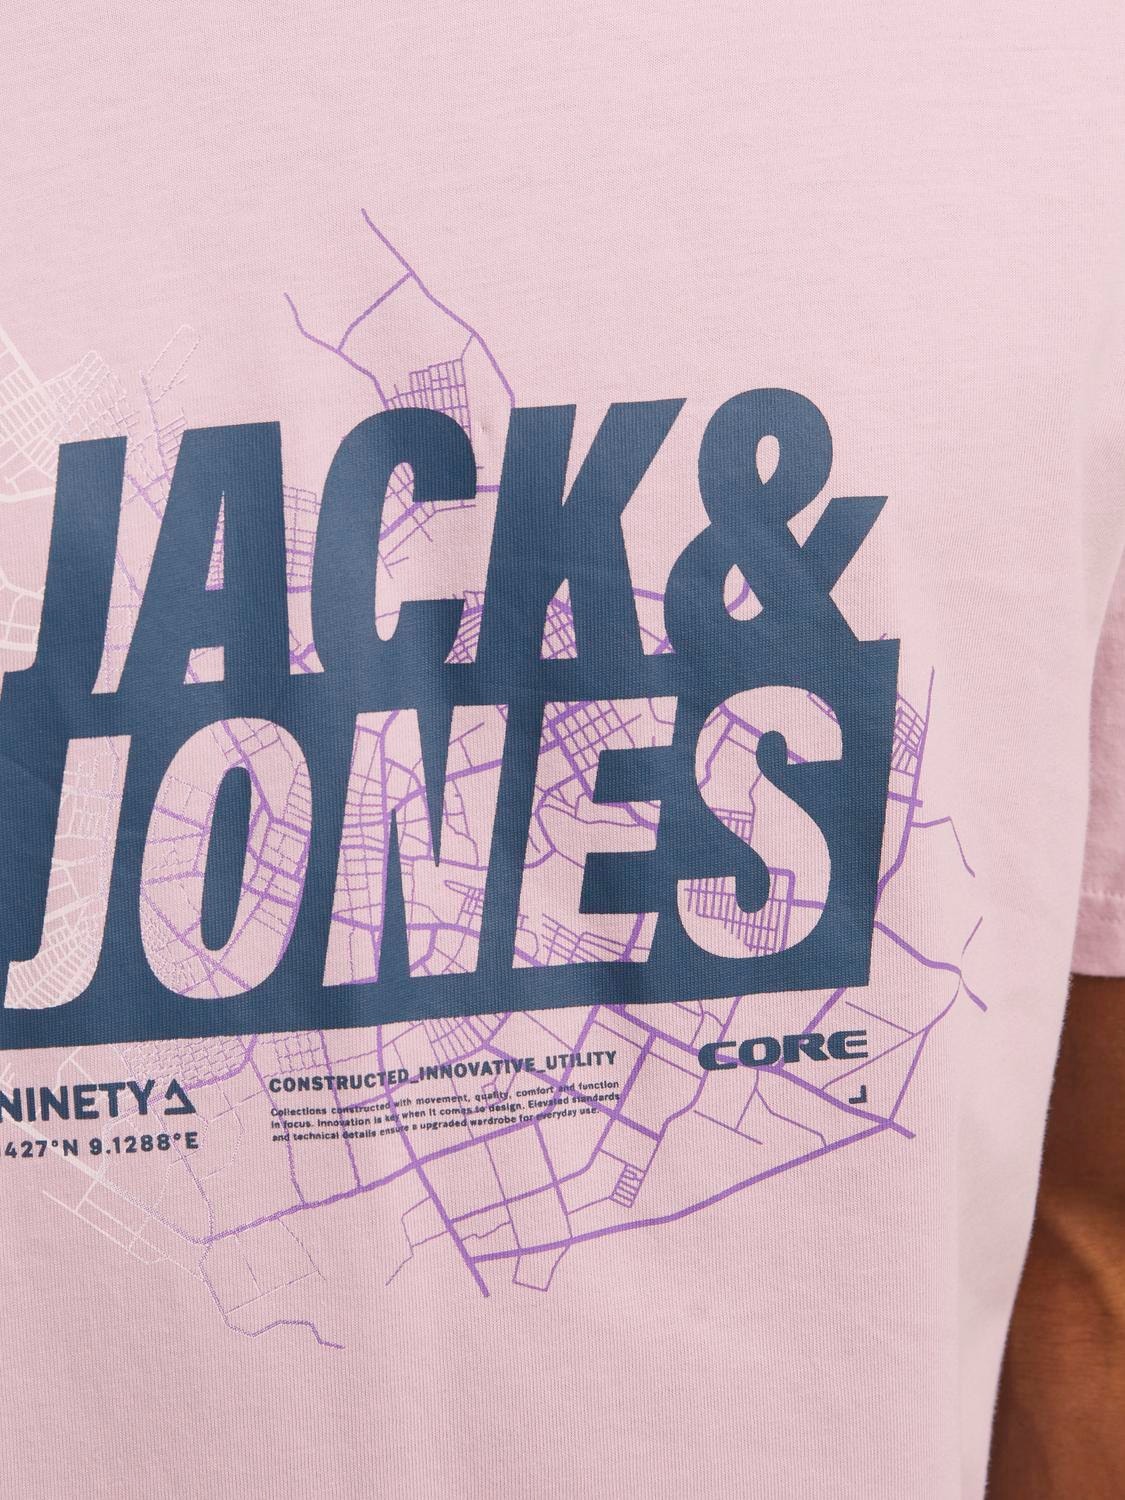 Jack & Jones Gedruckt Rundhals T-shirt -Winsome Orchid - 12257908